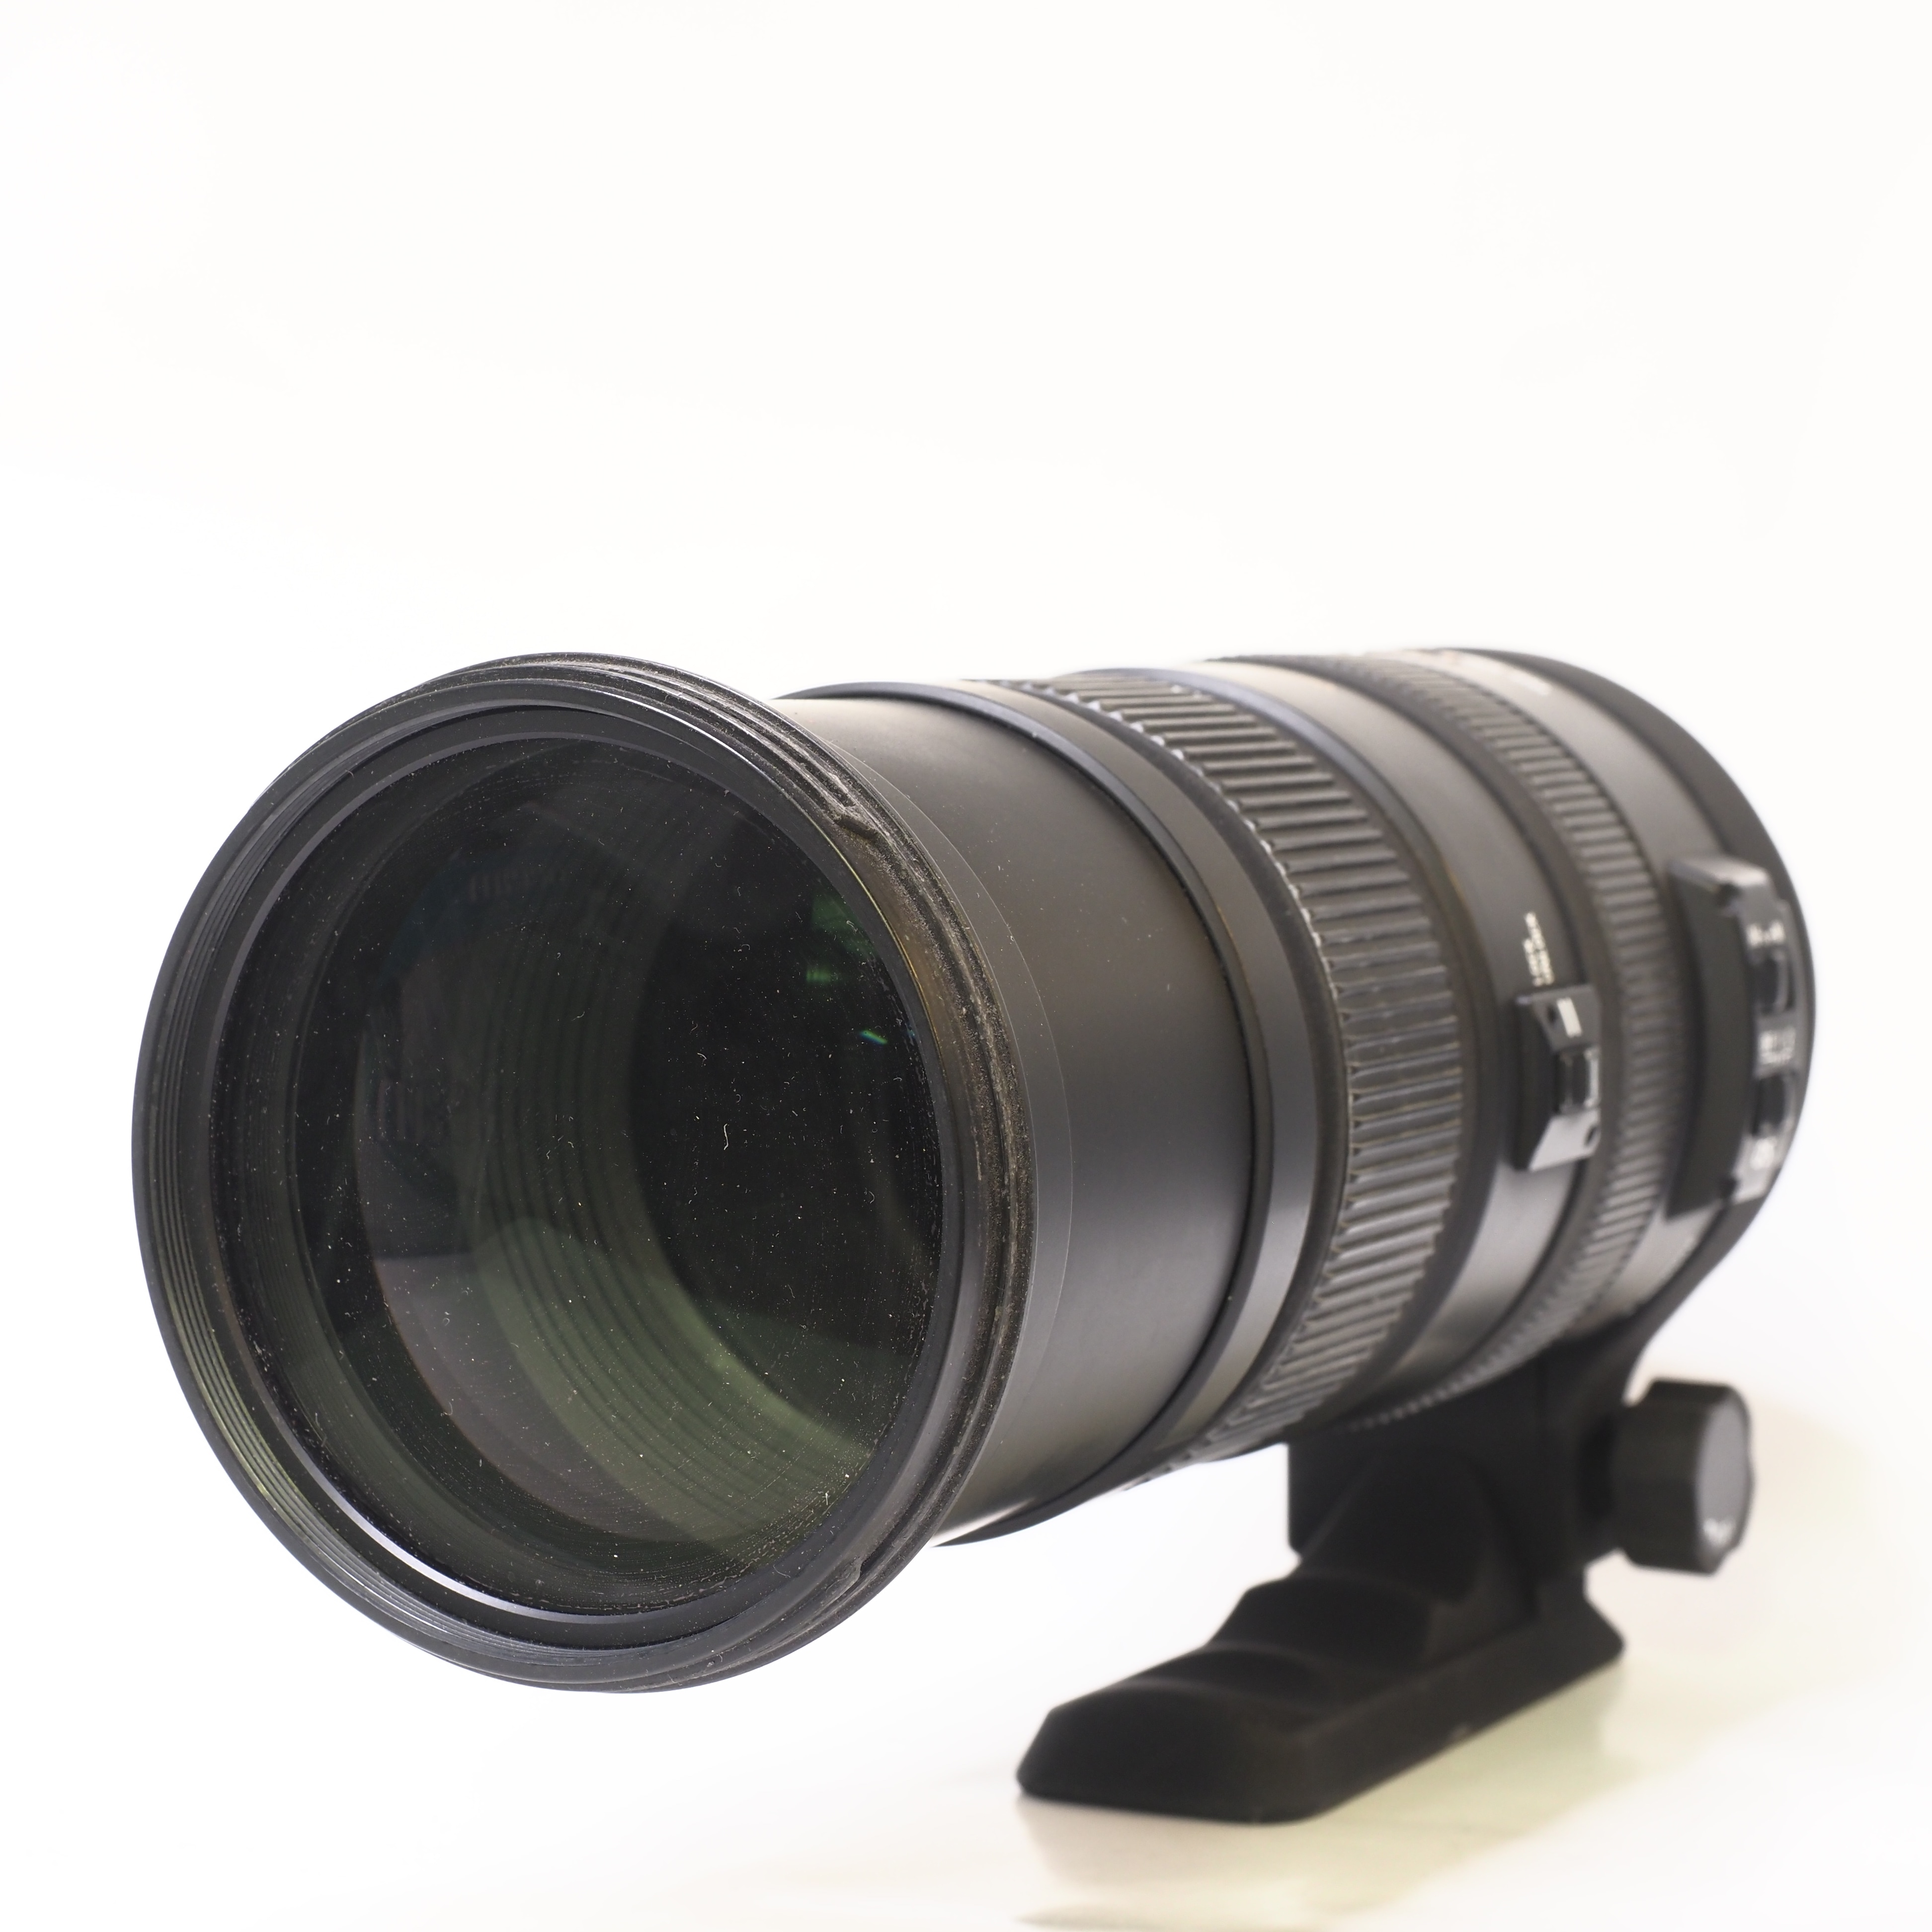 Sigma 150-500mm f/5-6,3 APO HSM OS till Nikon - Begagnat